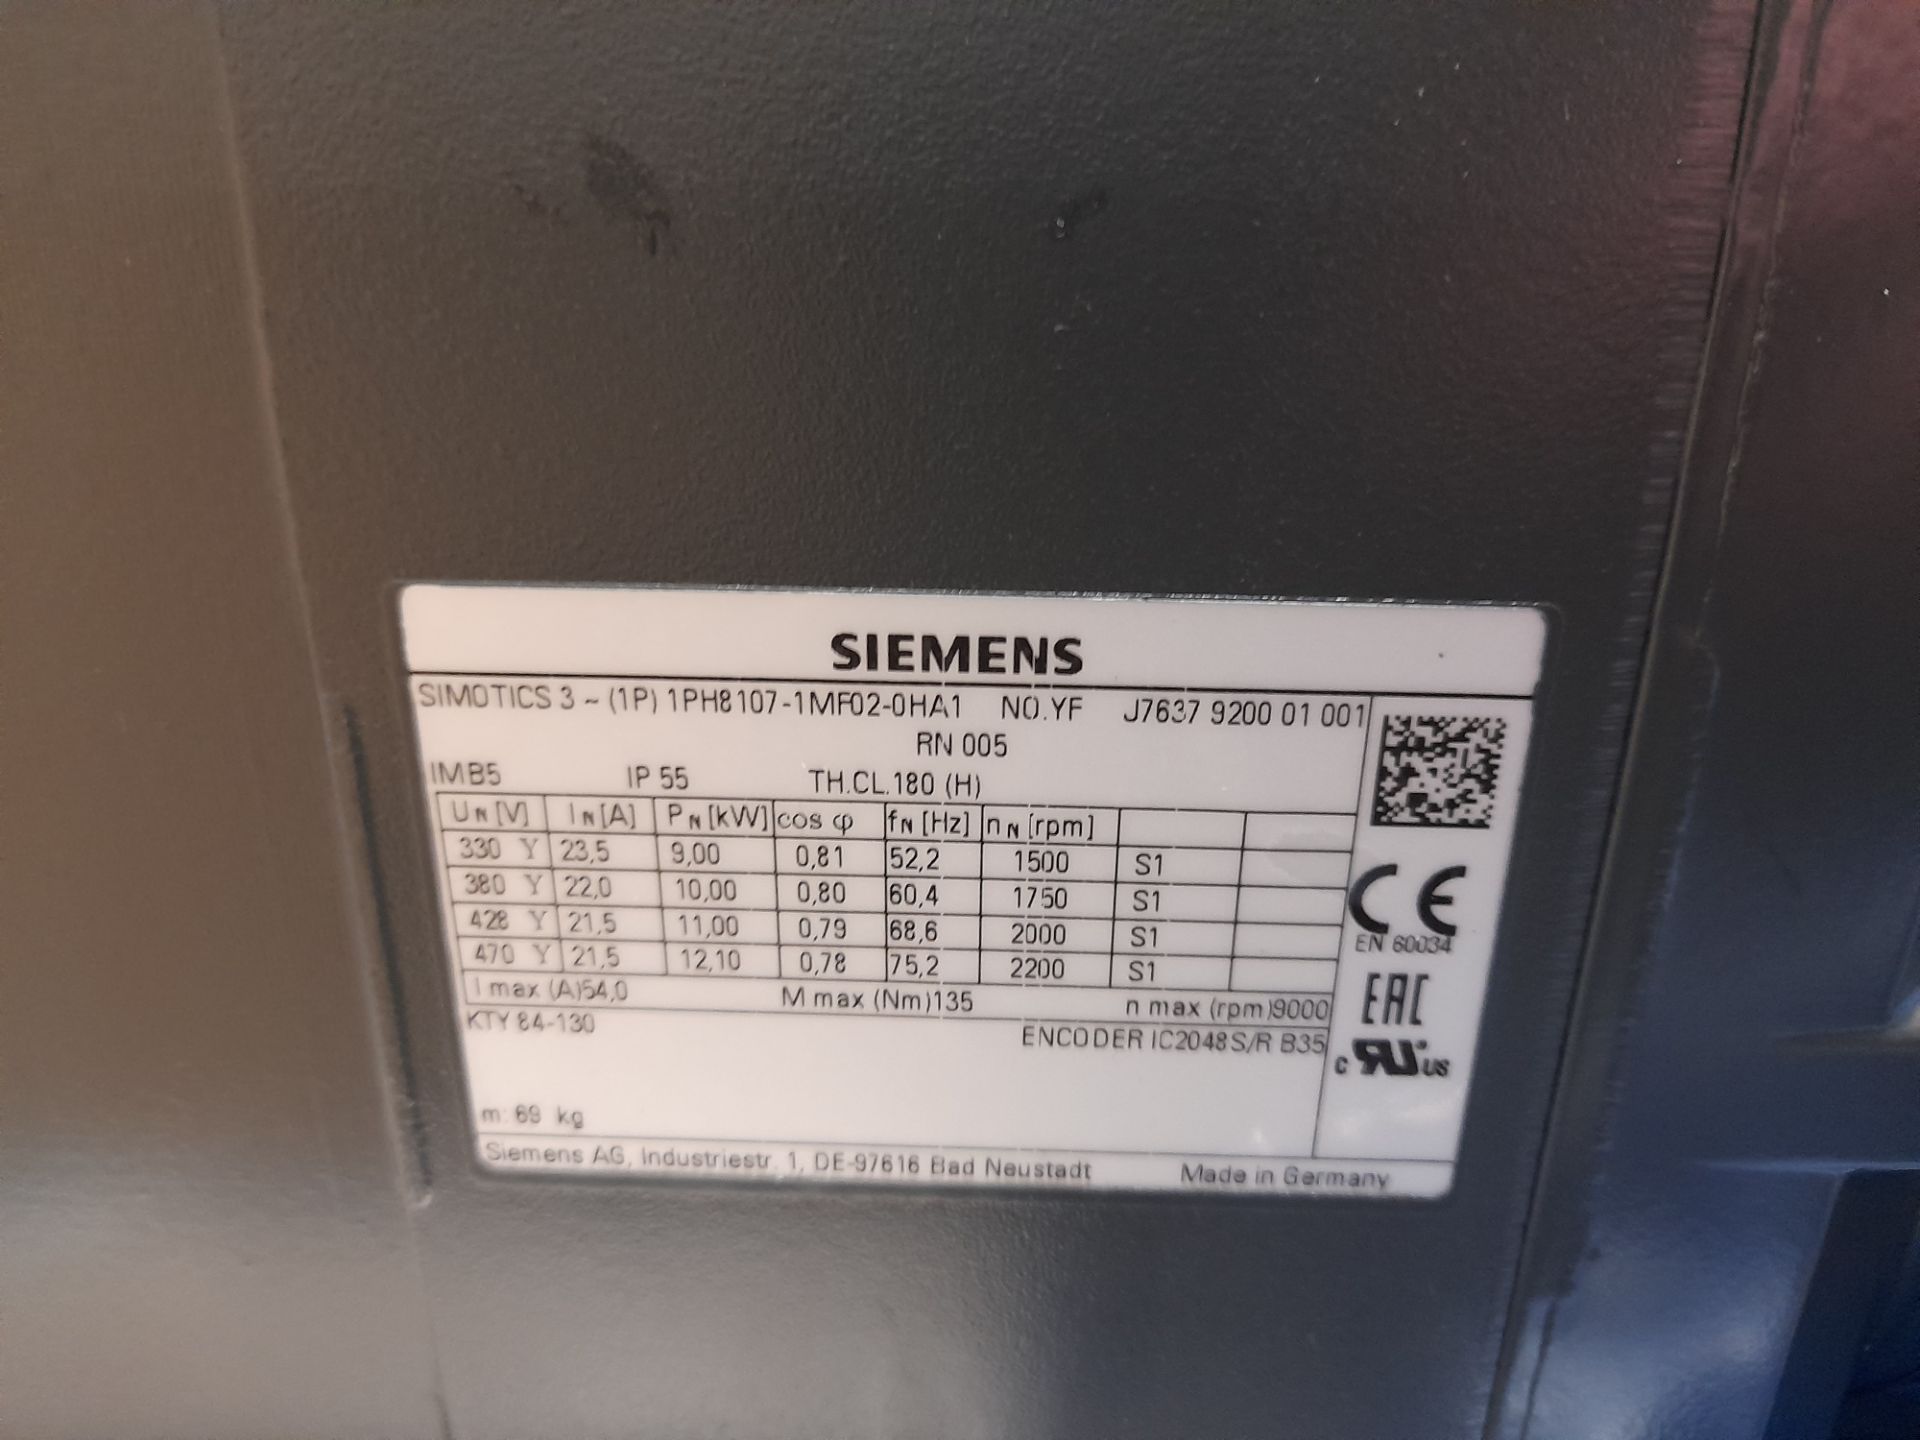 Siemens SIMO TICS3 (IP) IPH8107-IMF02-OHAI No YFJ76379200 01 001 electric motor (Unused) - Image 4 of 5